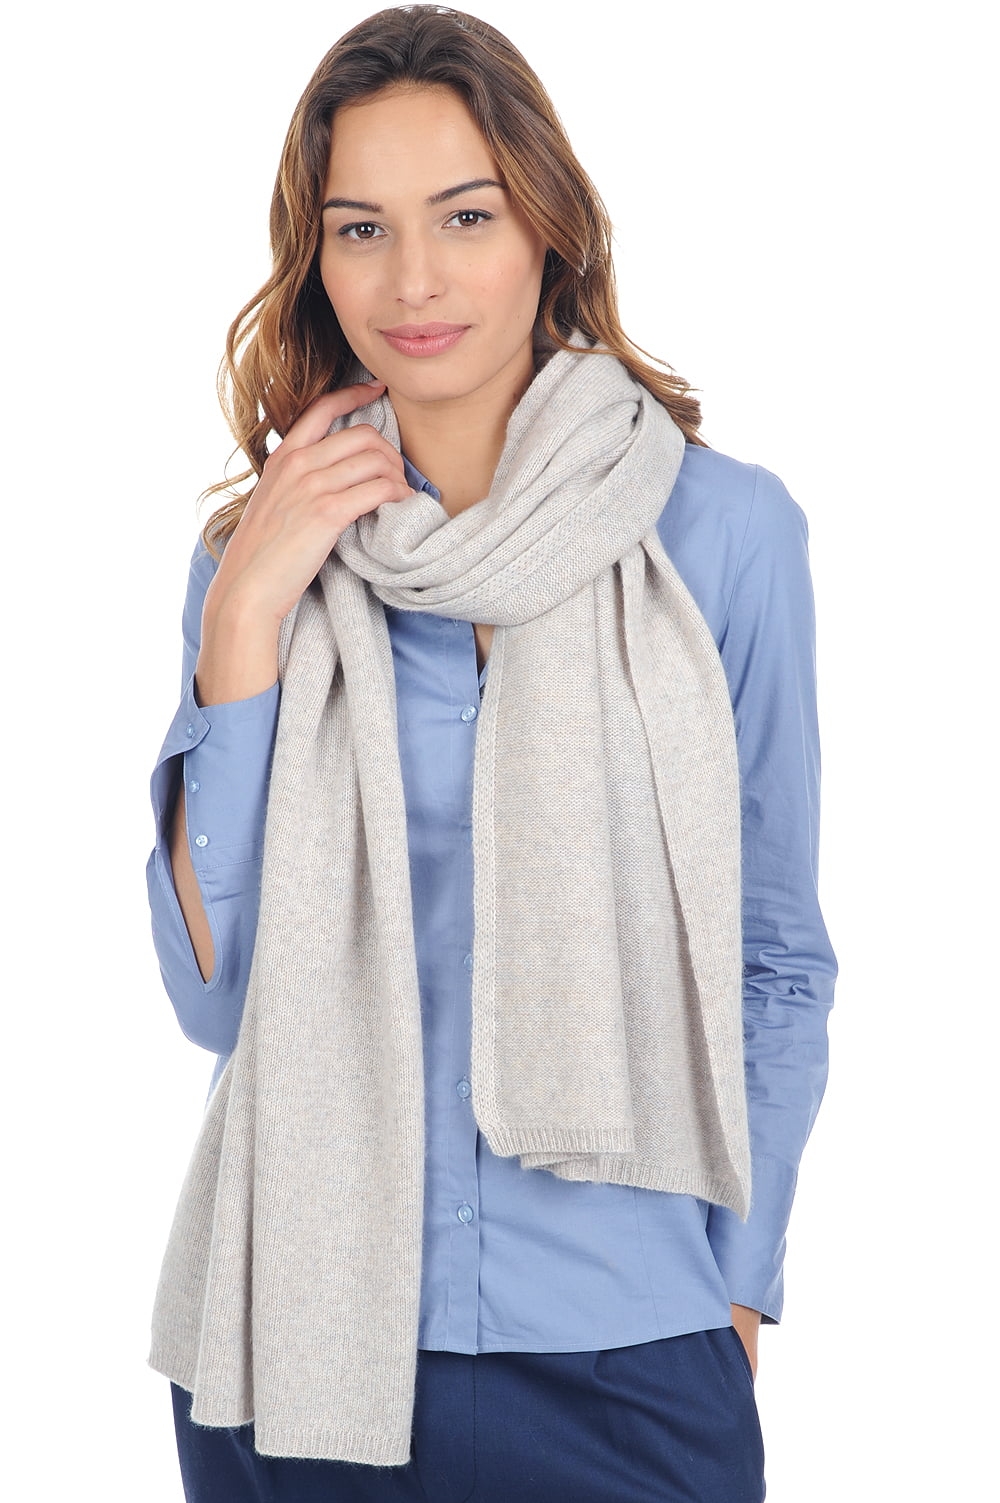 Cashmere accessories scarves mufflers gribouille chinchilla 210 x 45 cm